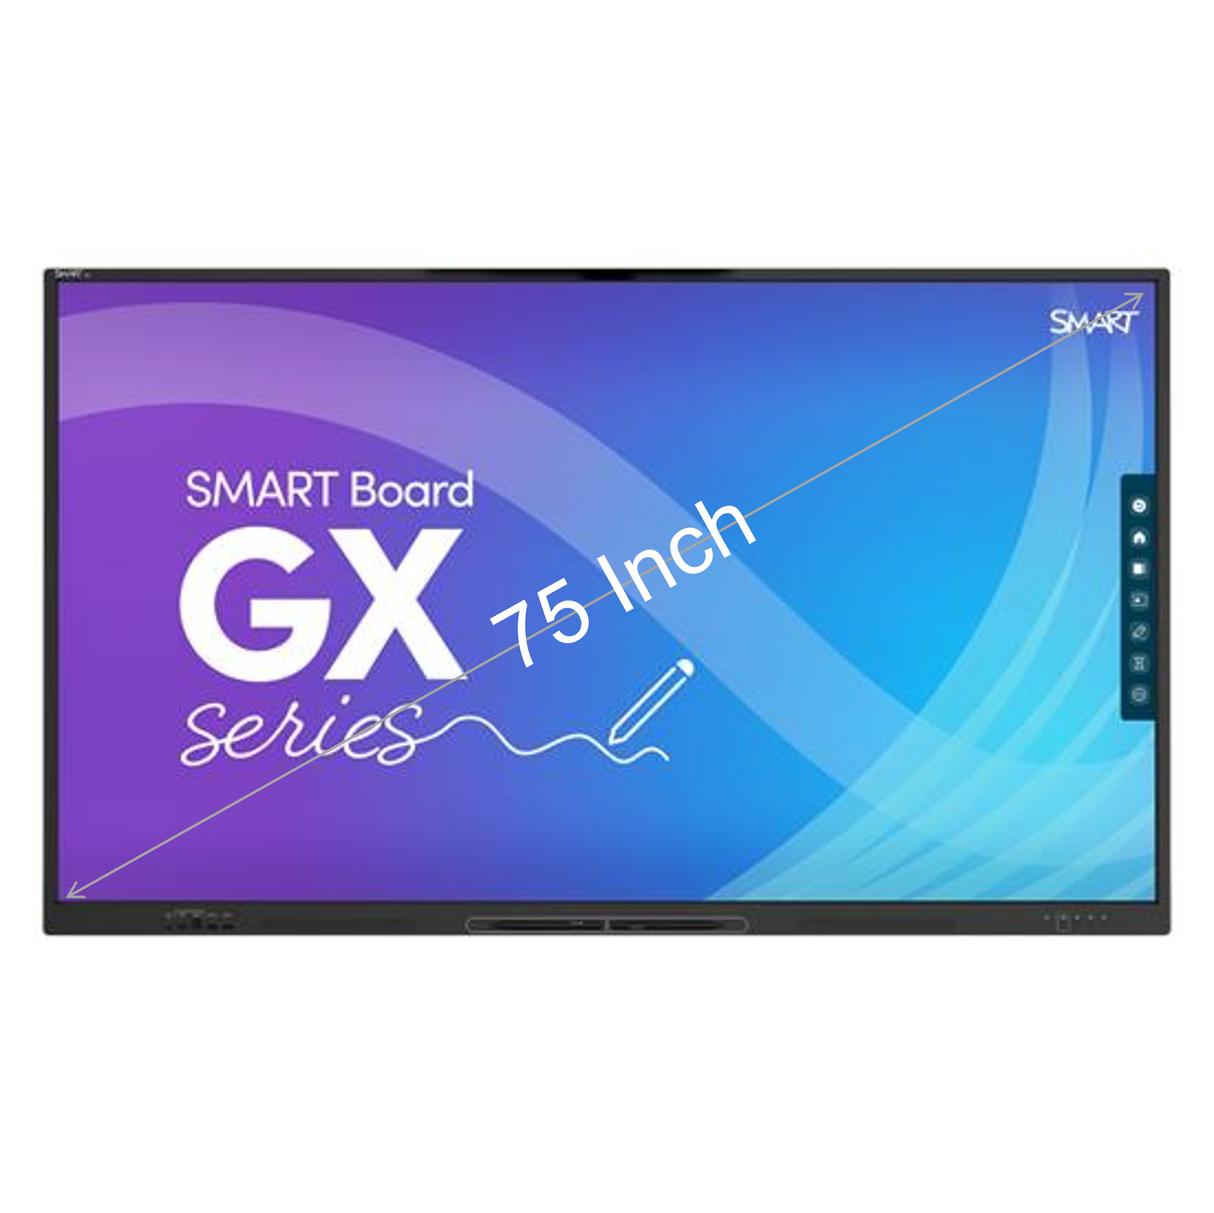 75" SMART Board GX (V2) SBID-GX175-V2